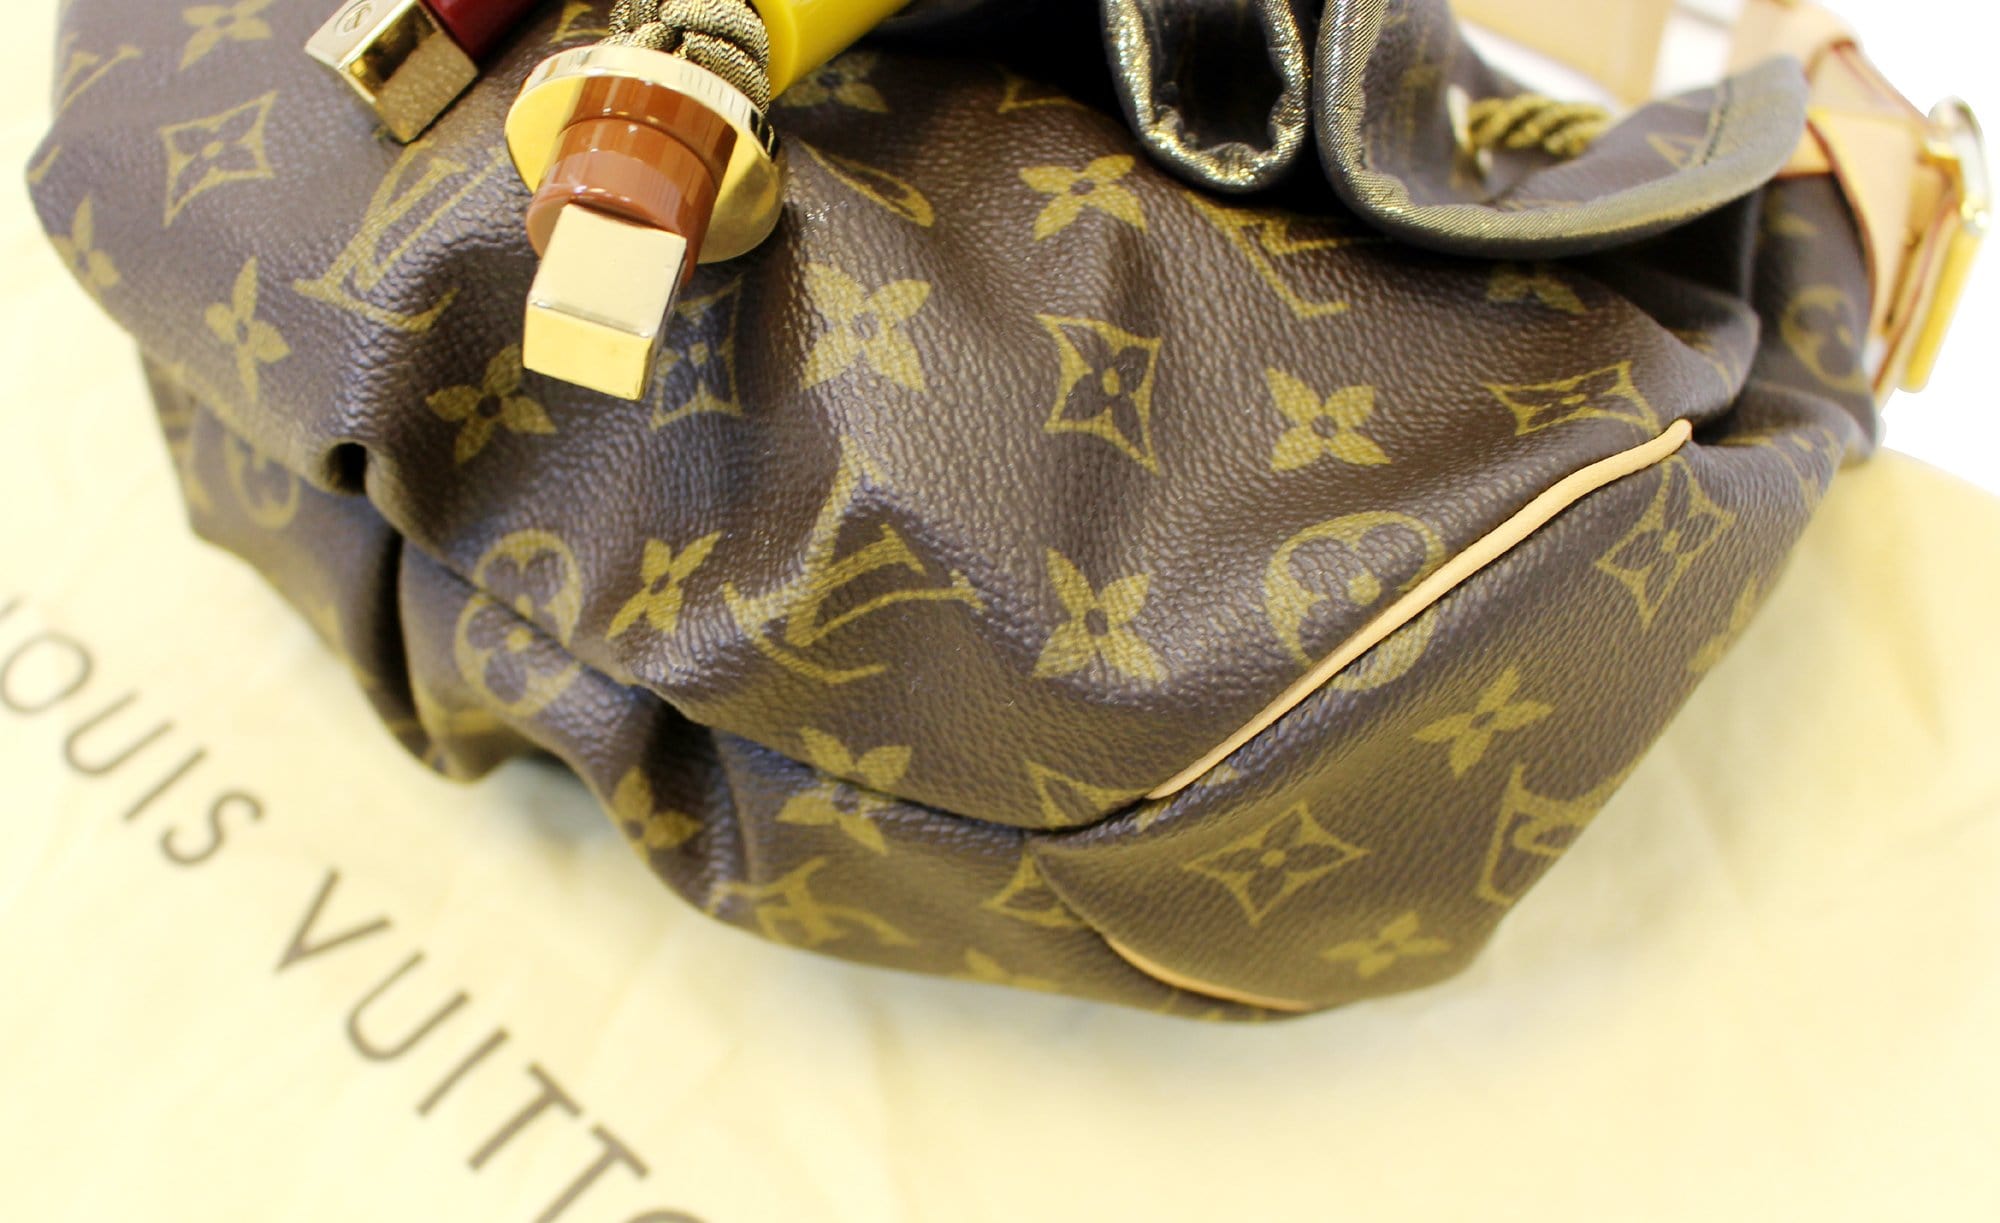 Leather goods - Luis Vuitton bag Kalahari Spring 2009 limited edition